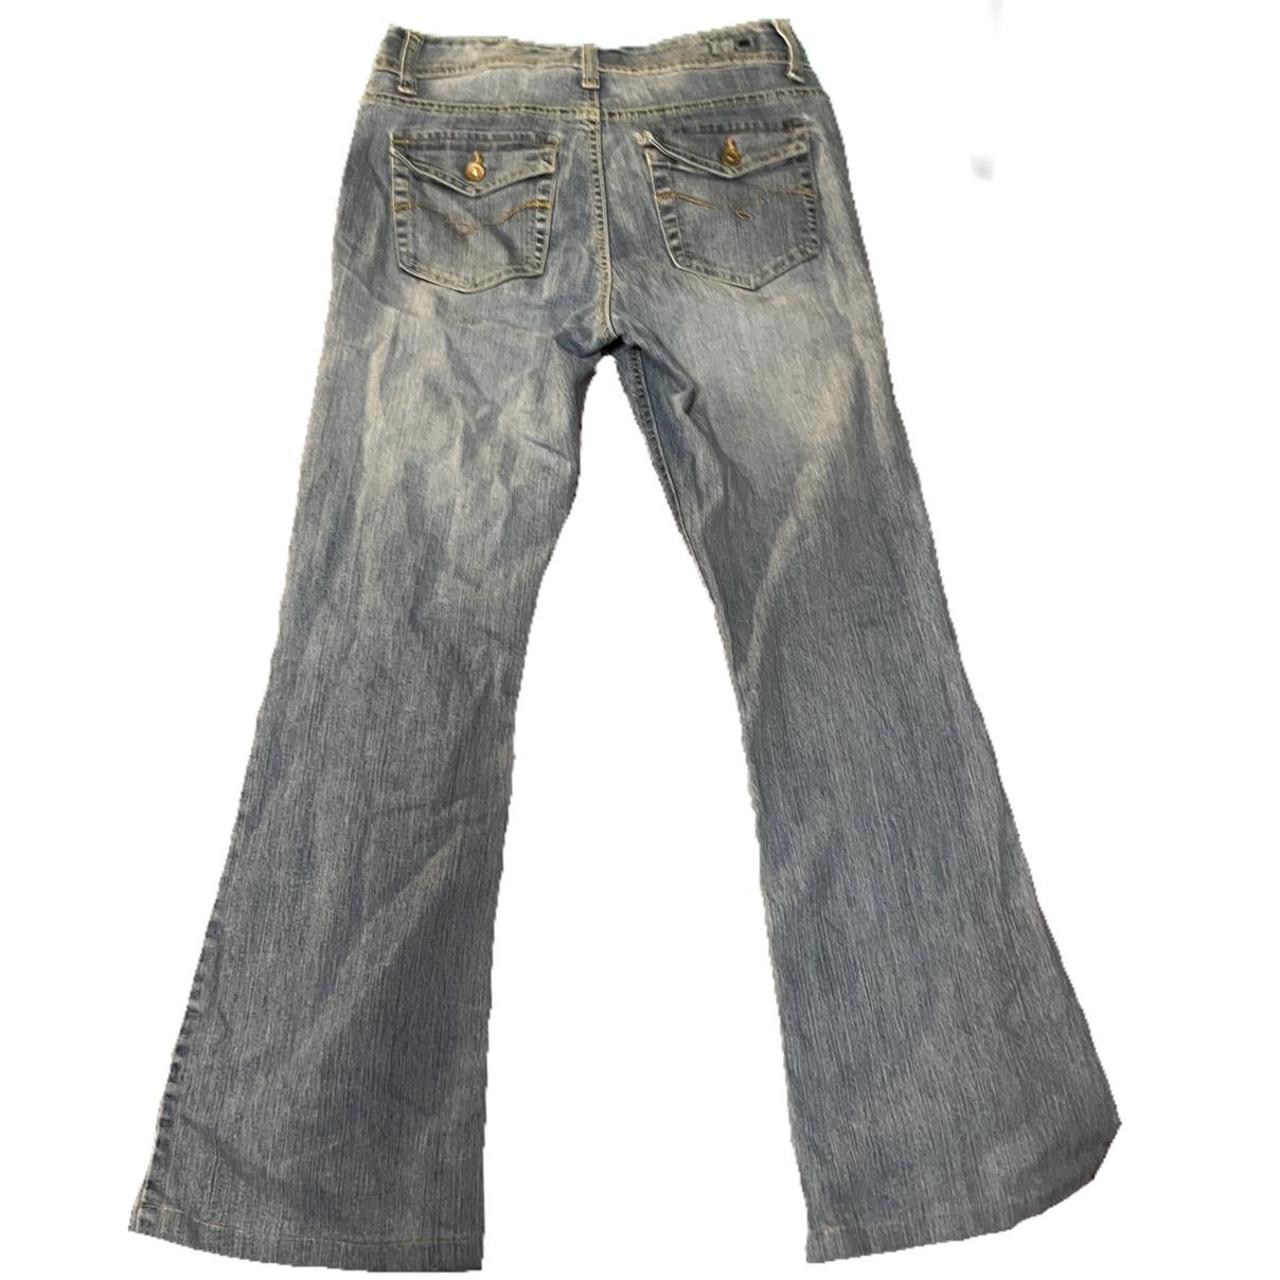 Bandolino Women's Jeans (4)